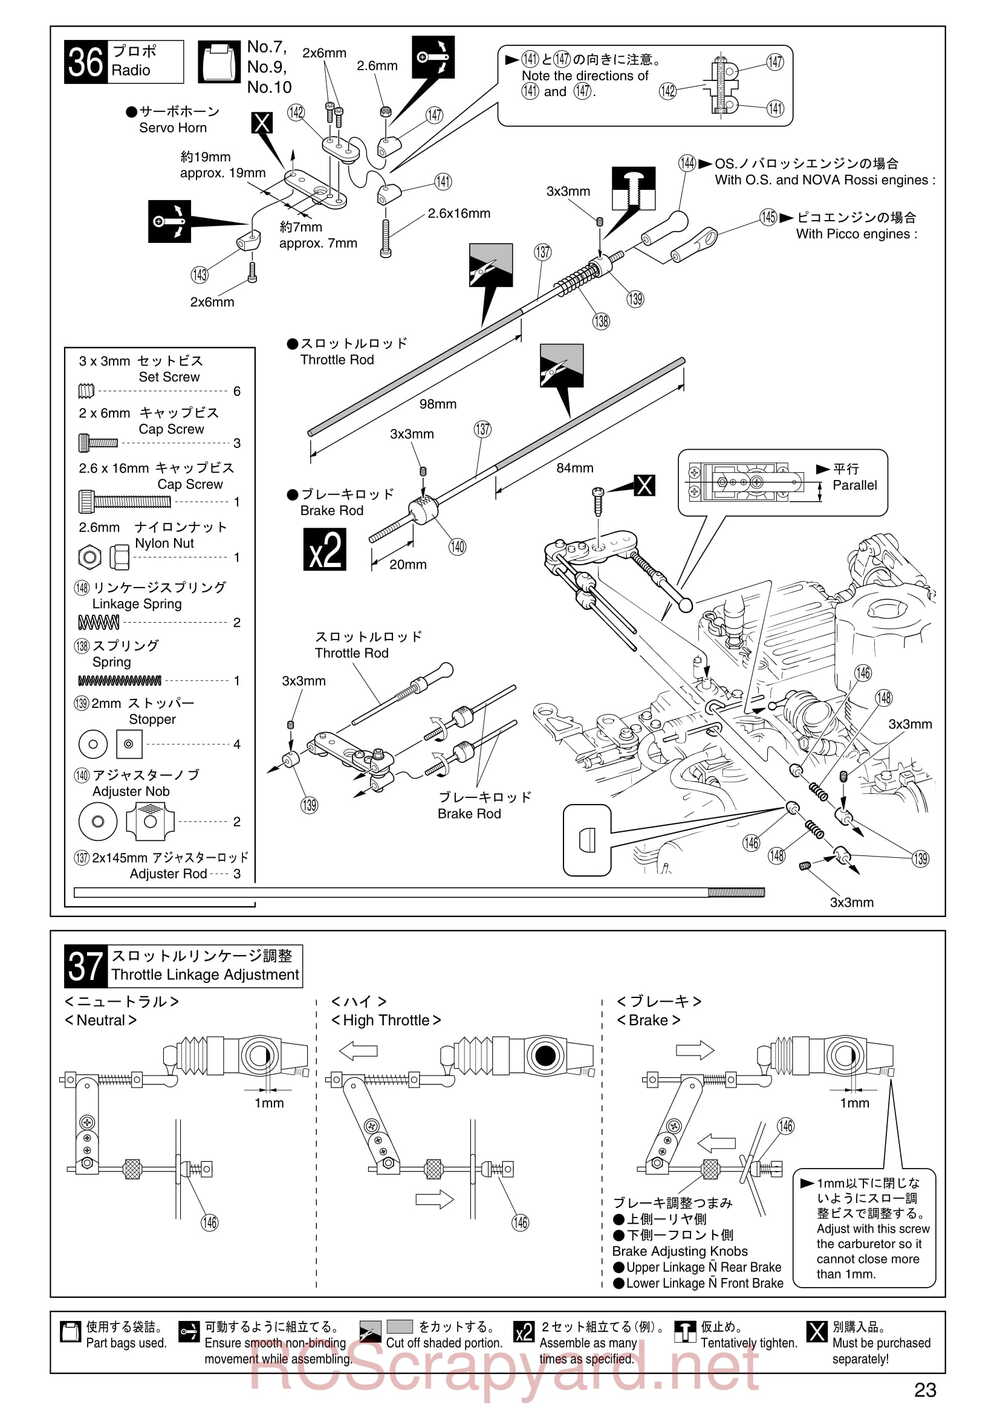 Kyosho - 31271 - Inferno-MP-7-5-Yuichi 2 - Manual - Page 23